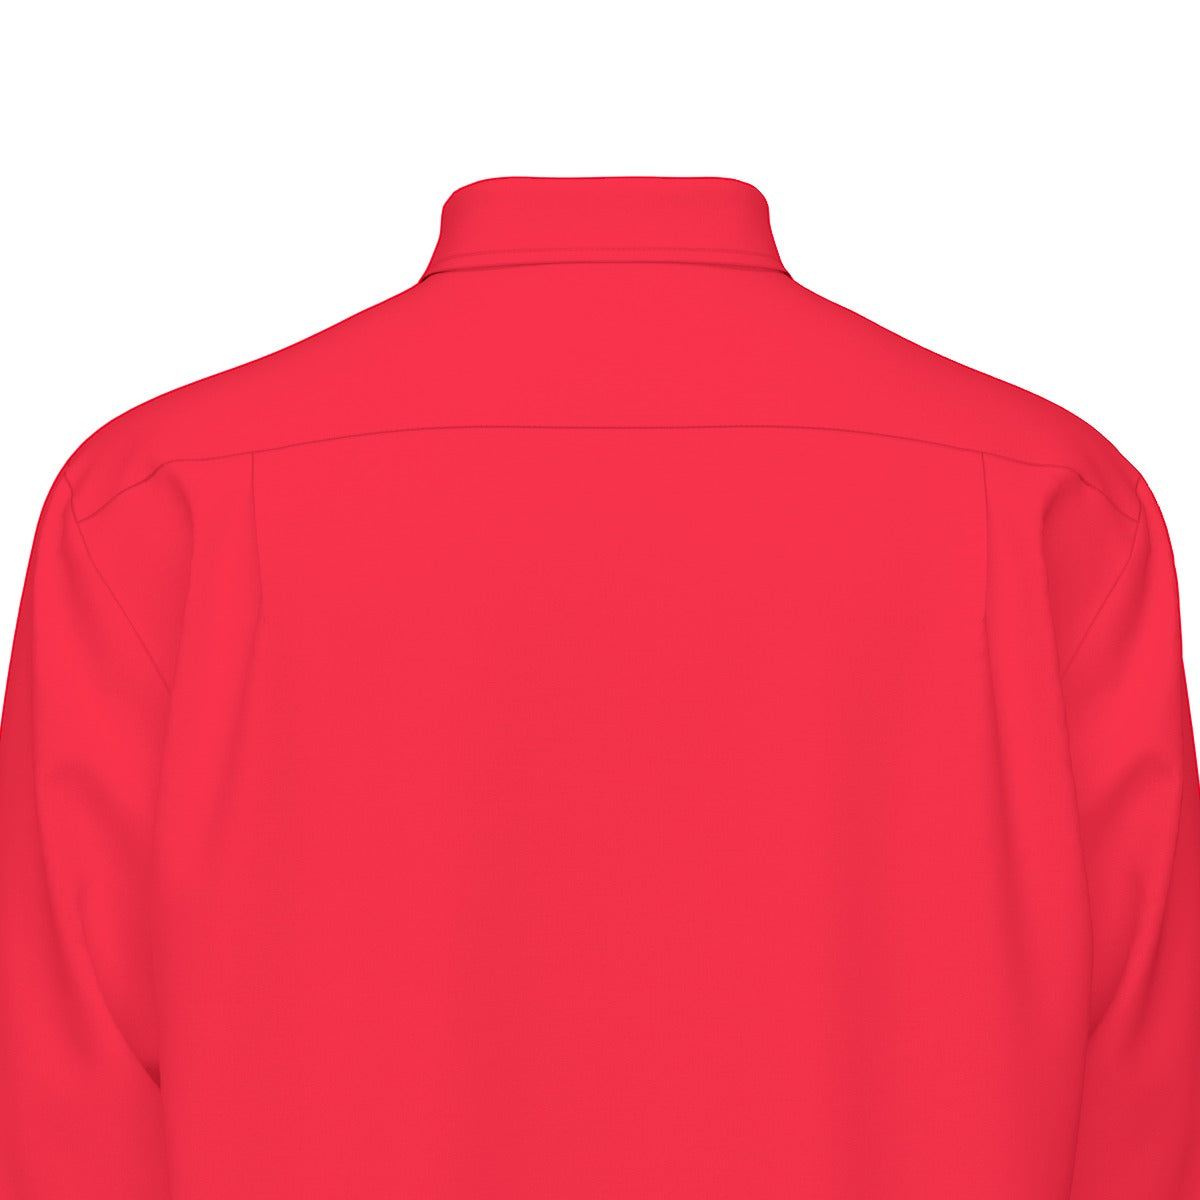 Sixty Eight 93 Logo White Red Men's Cotton Long Sleeve Shirt